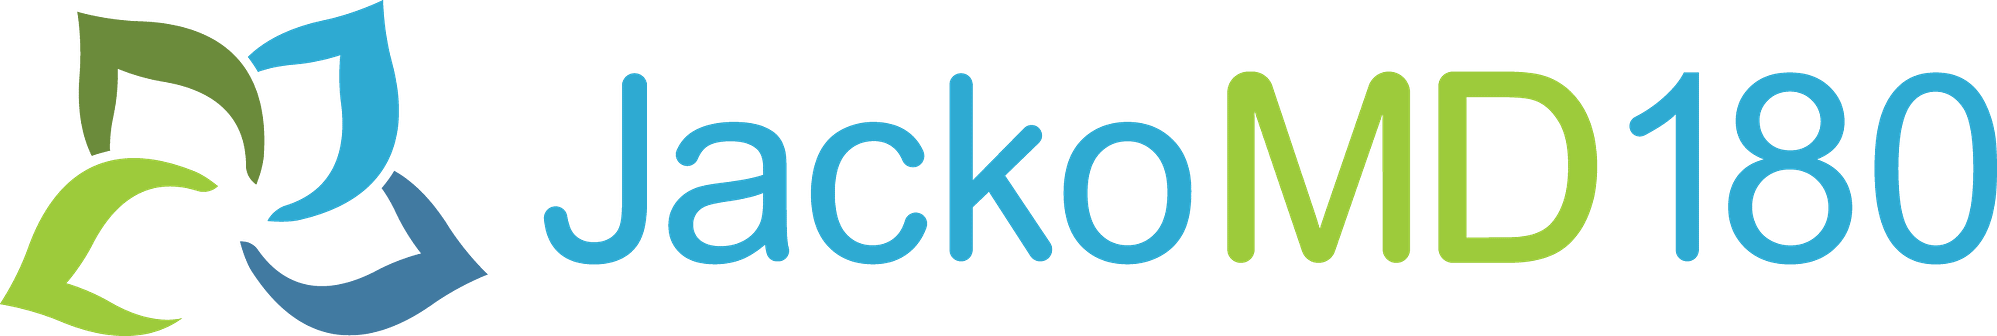 jacko md 180 logo dr. joe jacko's website